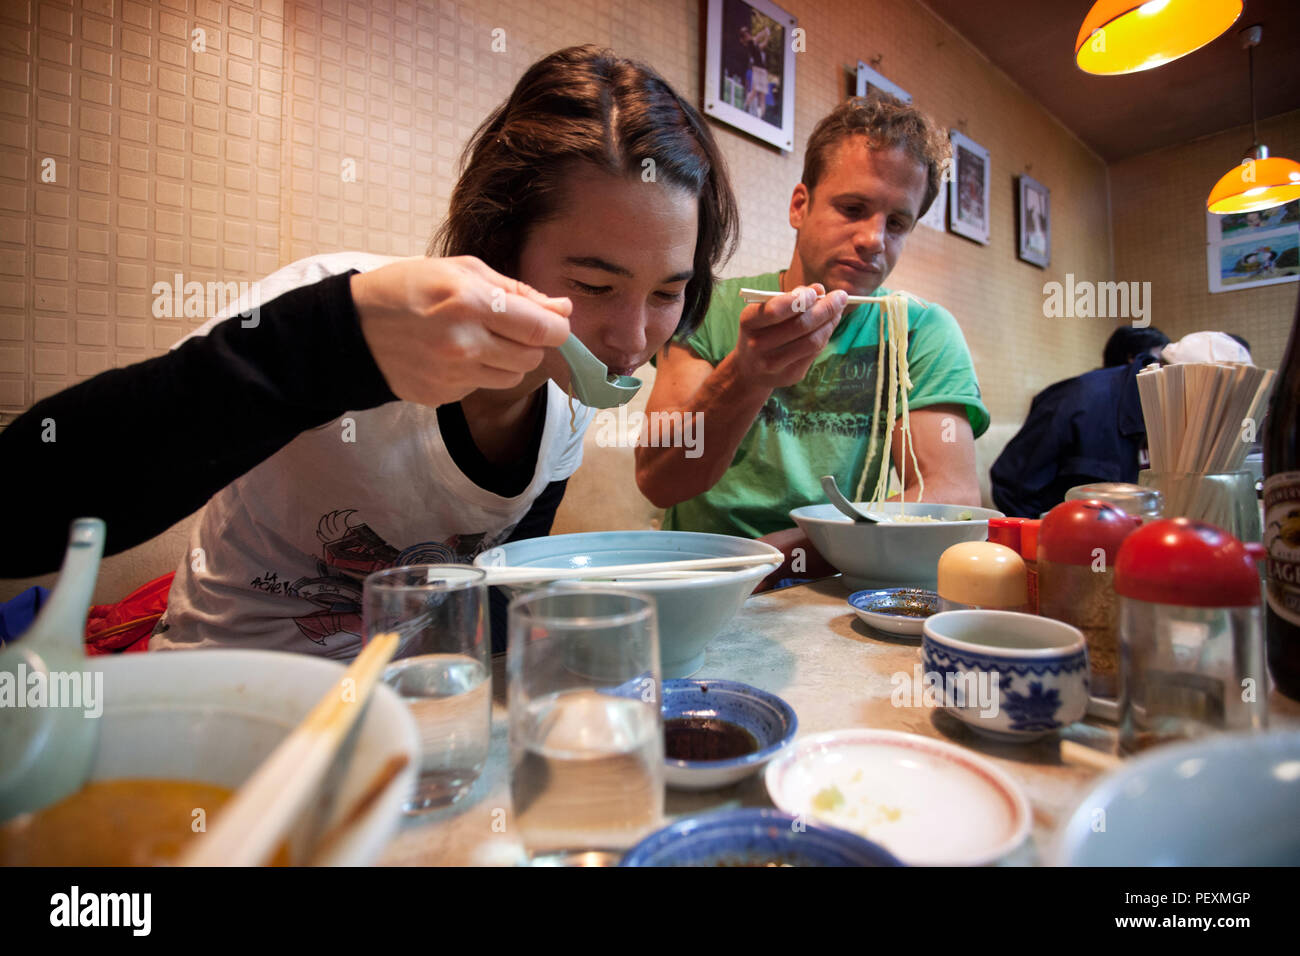 People eating ramen noodles, Showa, Yamanashi Prefecture, Japan Stock Photo